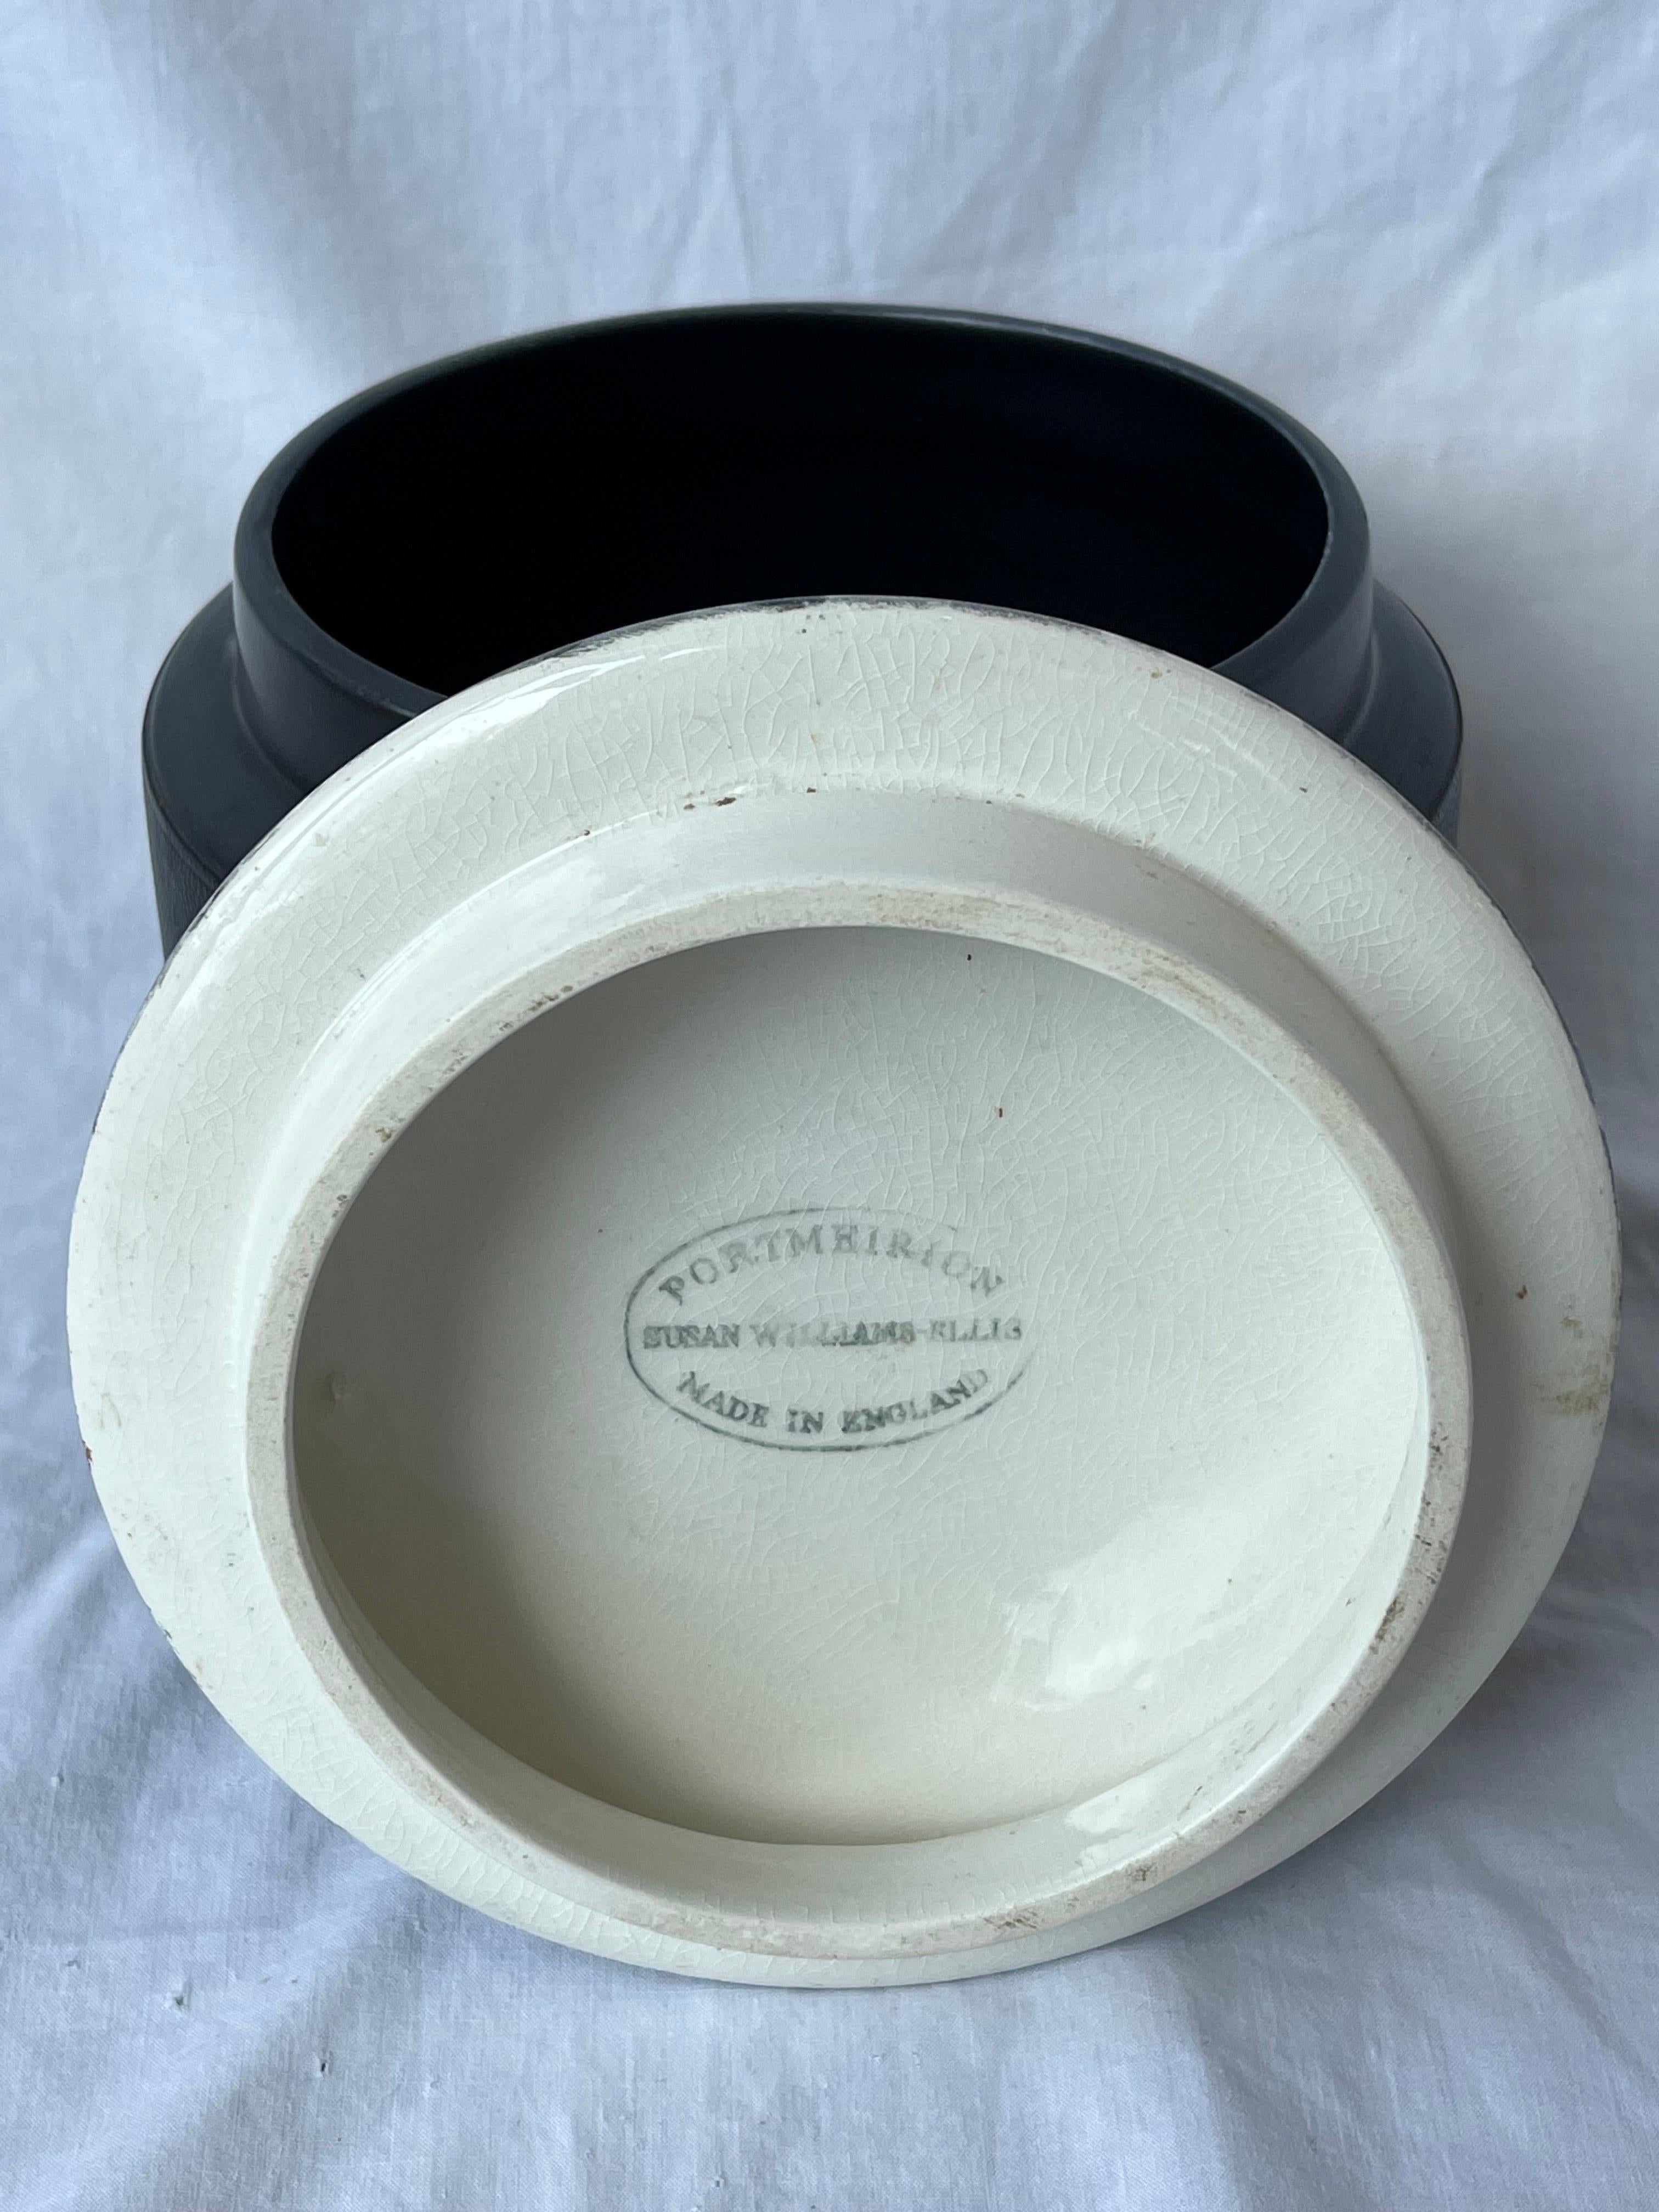 Ceramic Vintage Portmeirion Lidded Tobacco Jar Comroy's of London Susan Williams Ellis